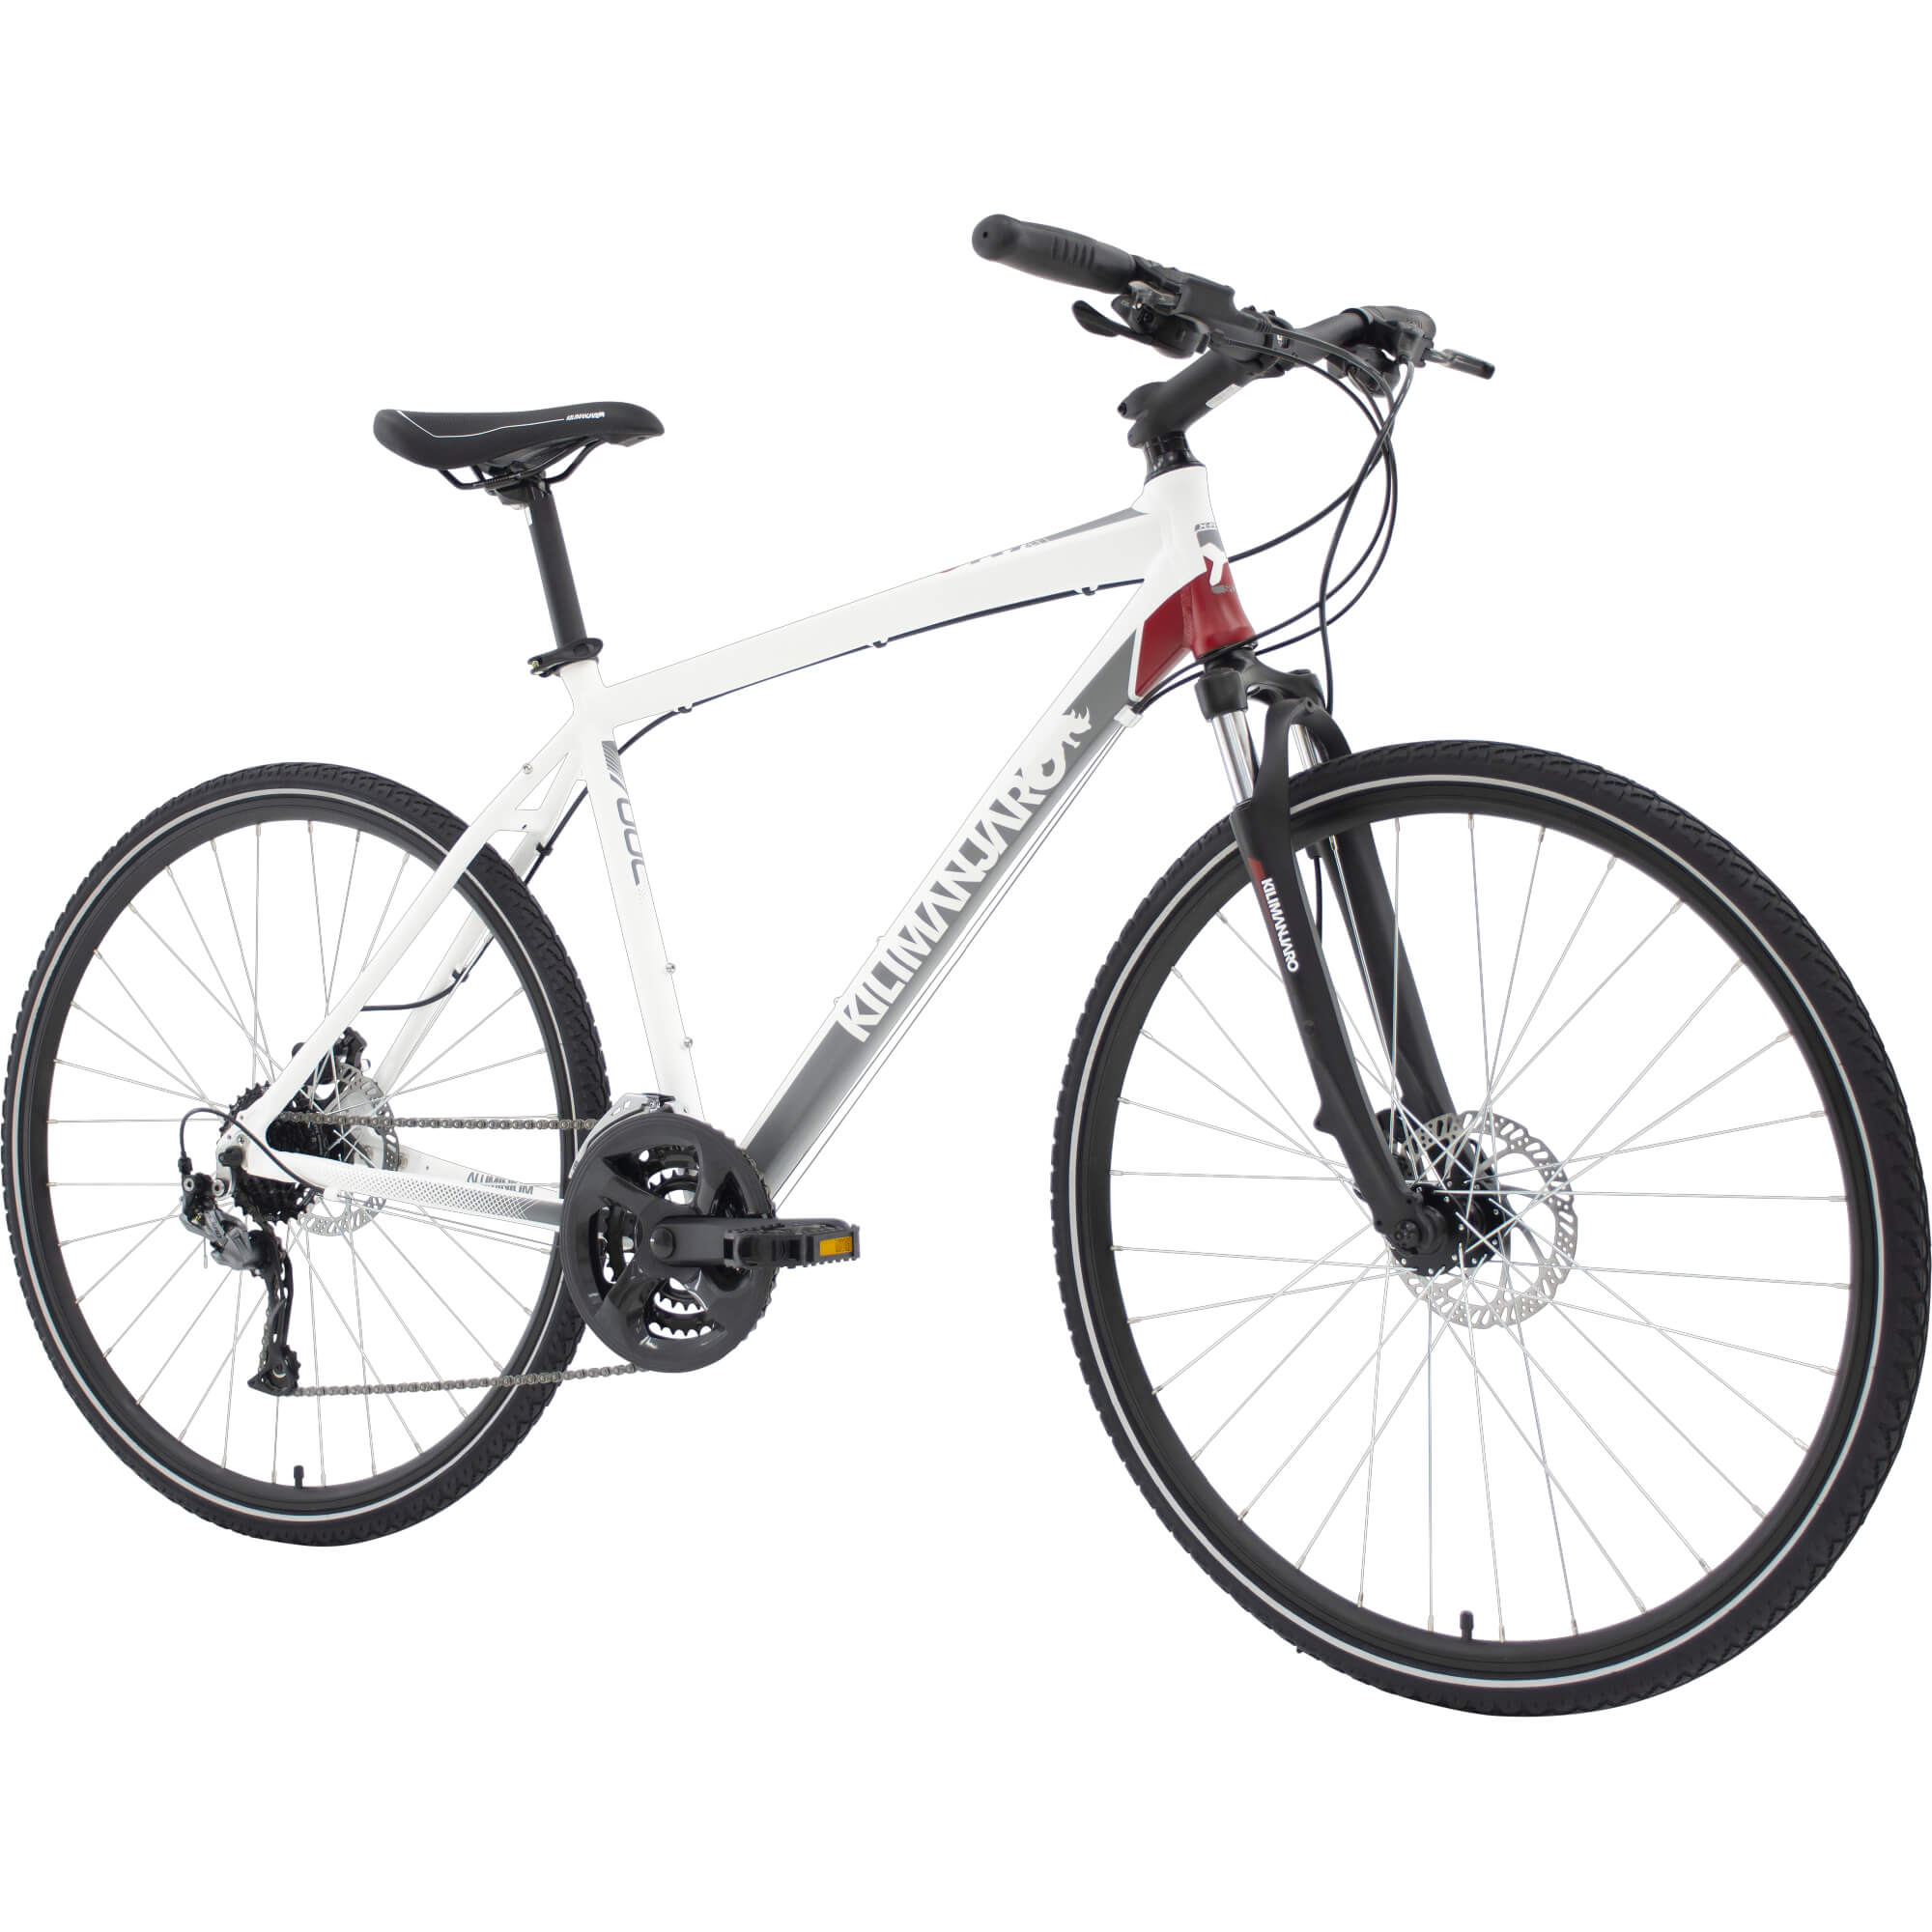 Ministry Classroom Red date Bicicleta Crosscountry Cross Sport @ hervis.ro - Fundeal.ro - Reduceri pe  bune!